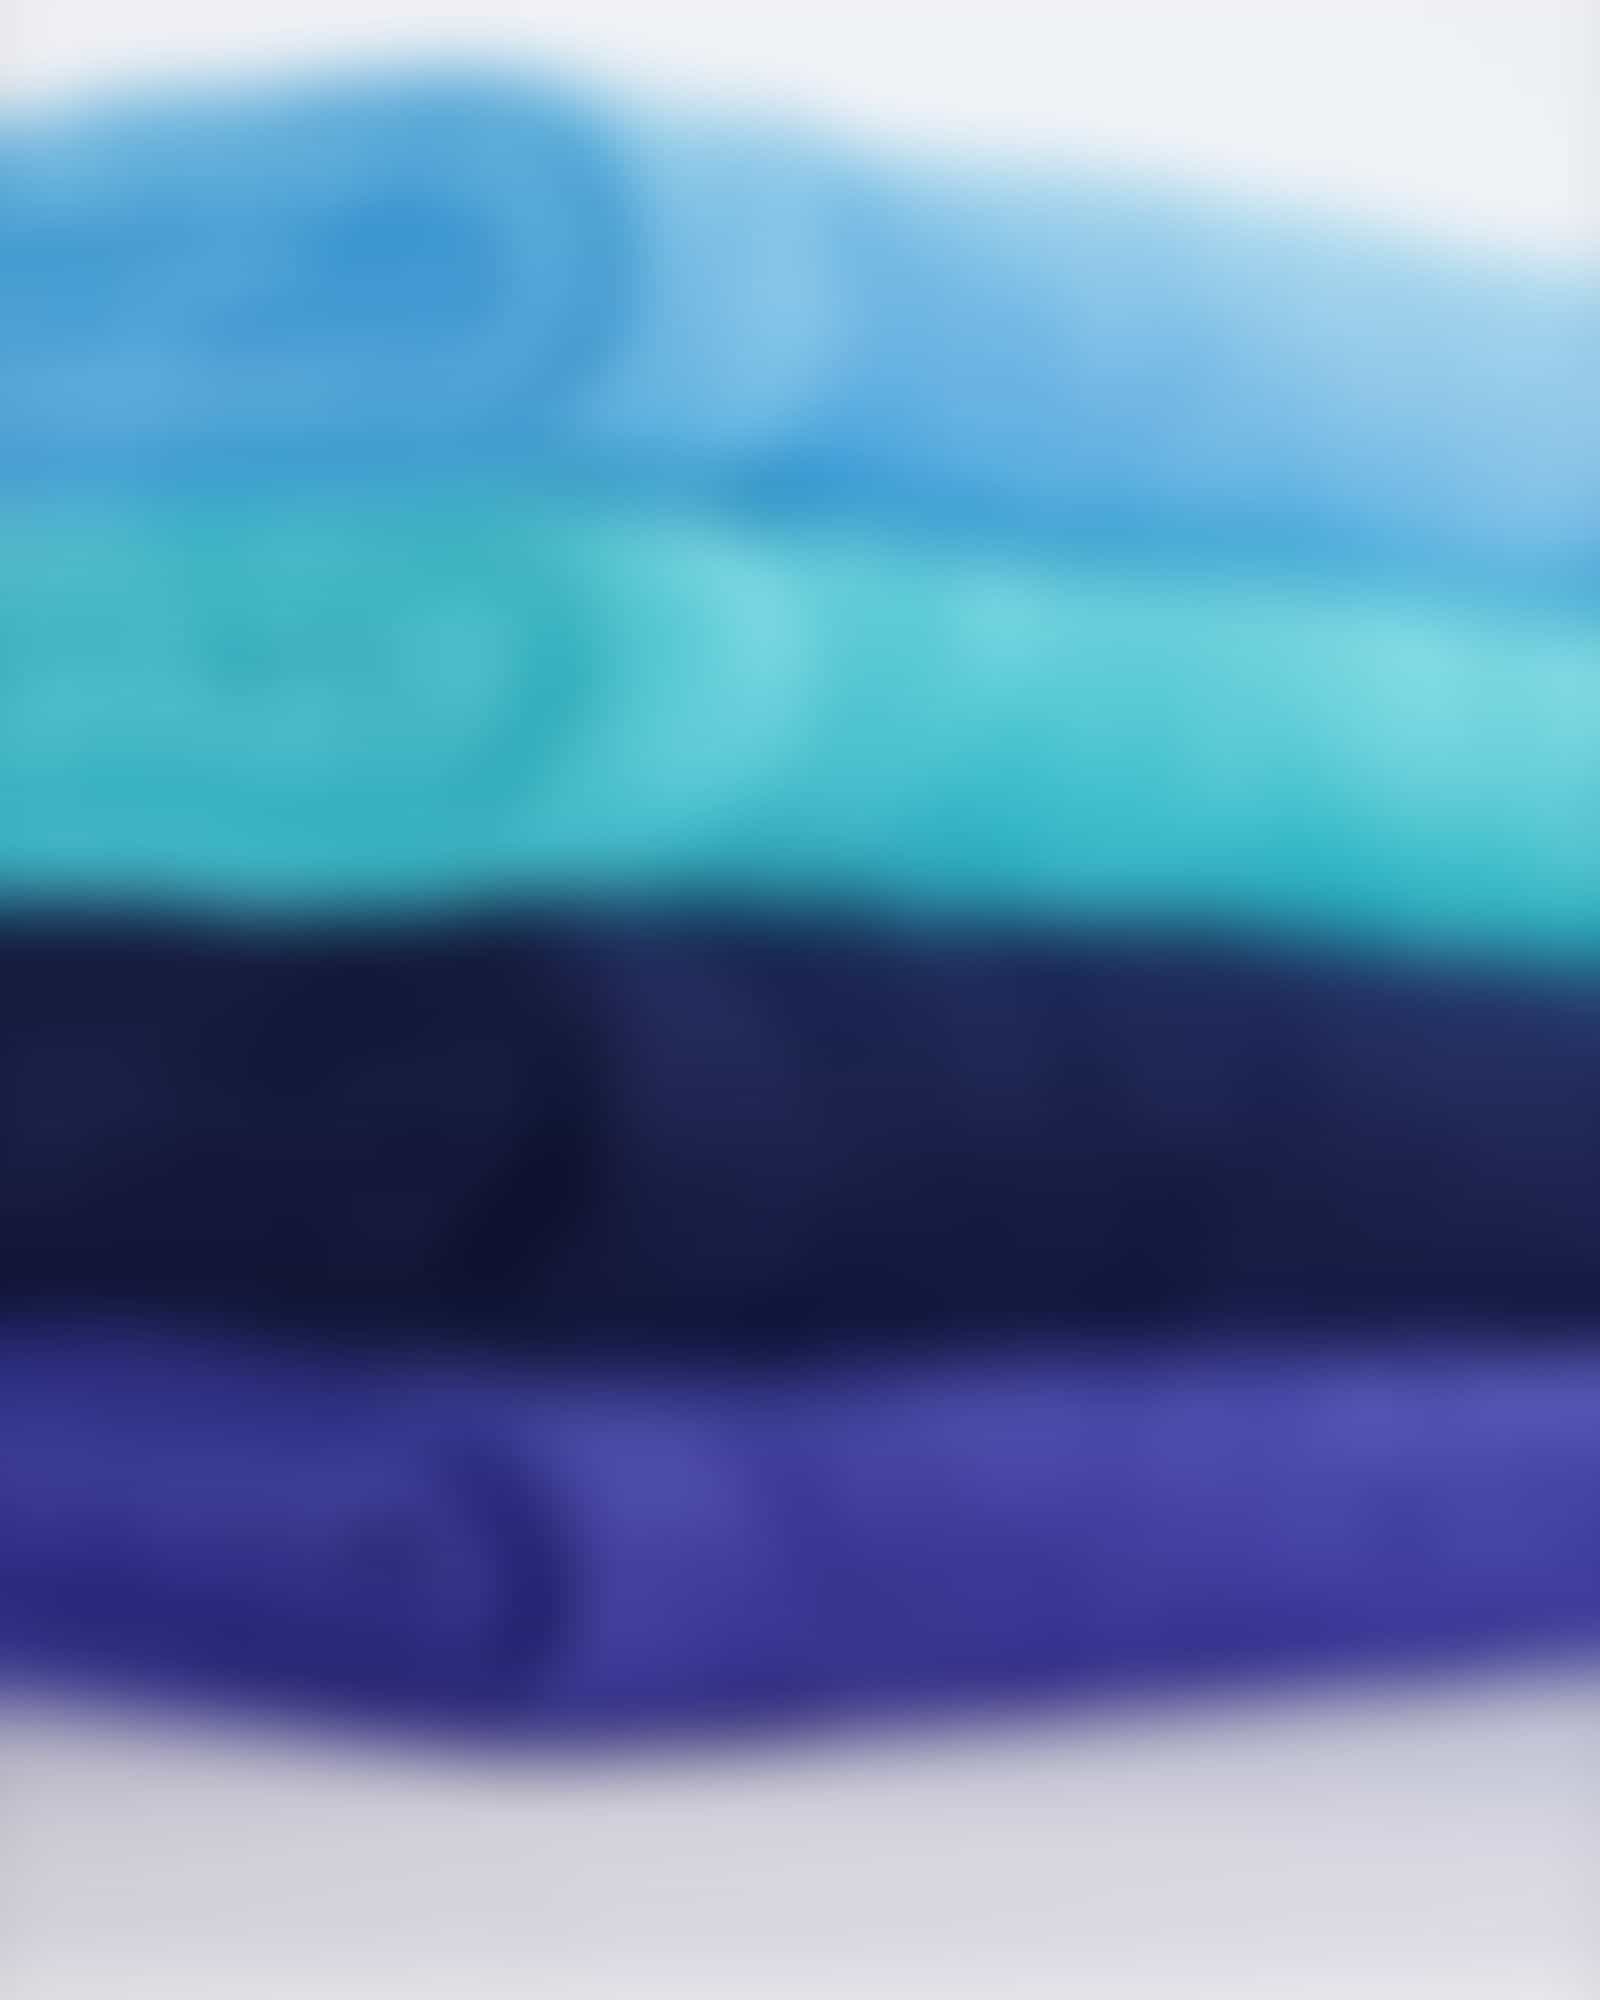 Cawö - Life Style Uni 7007 - Farbe: nachtblau - 111 - Duschtuch 70x140 cm